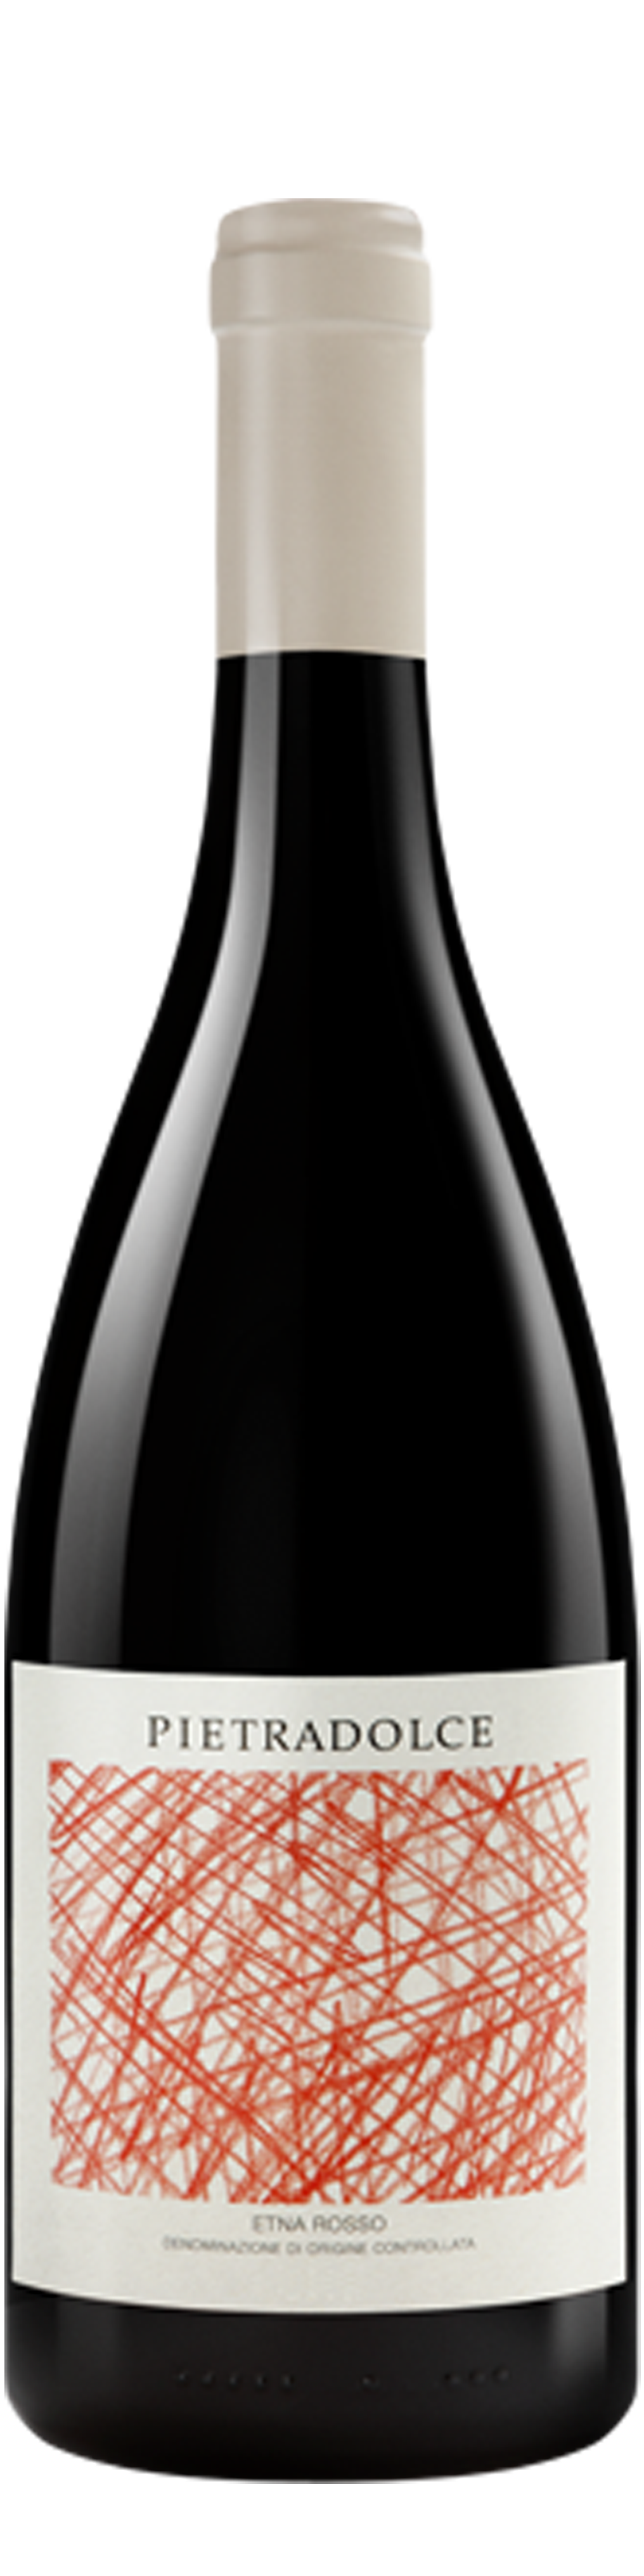 Bottle shot of 2015 Etna Rosso